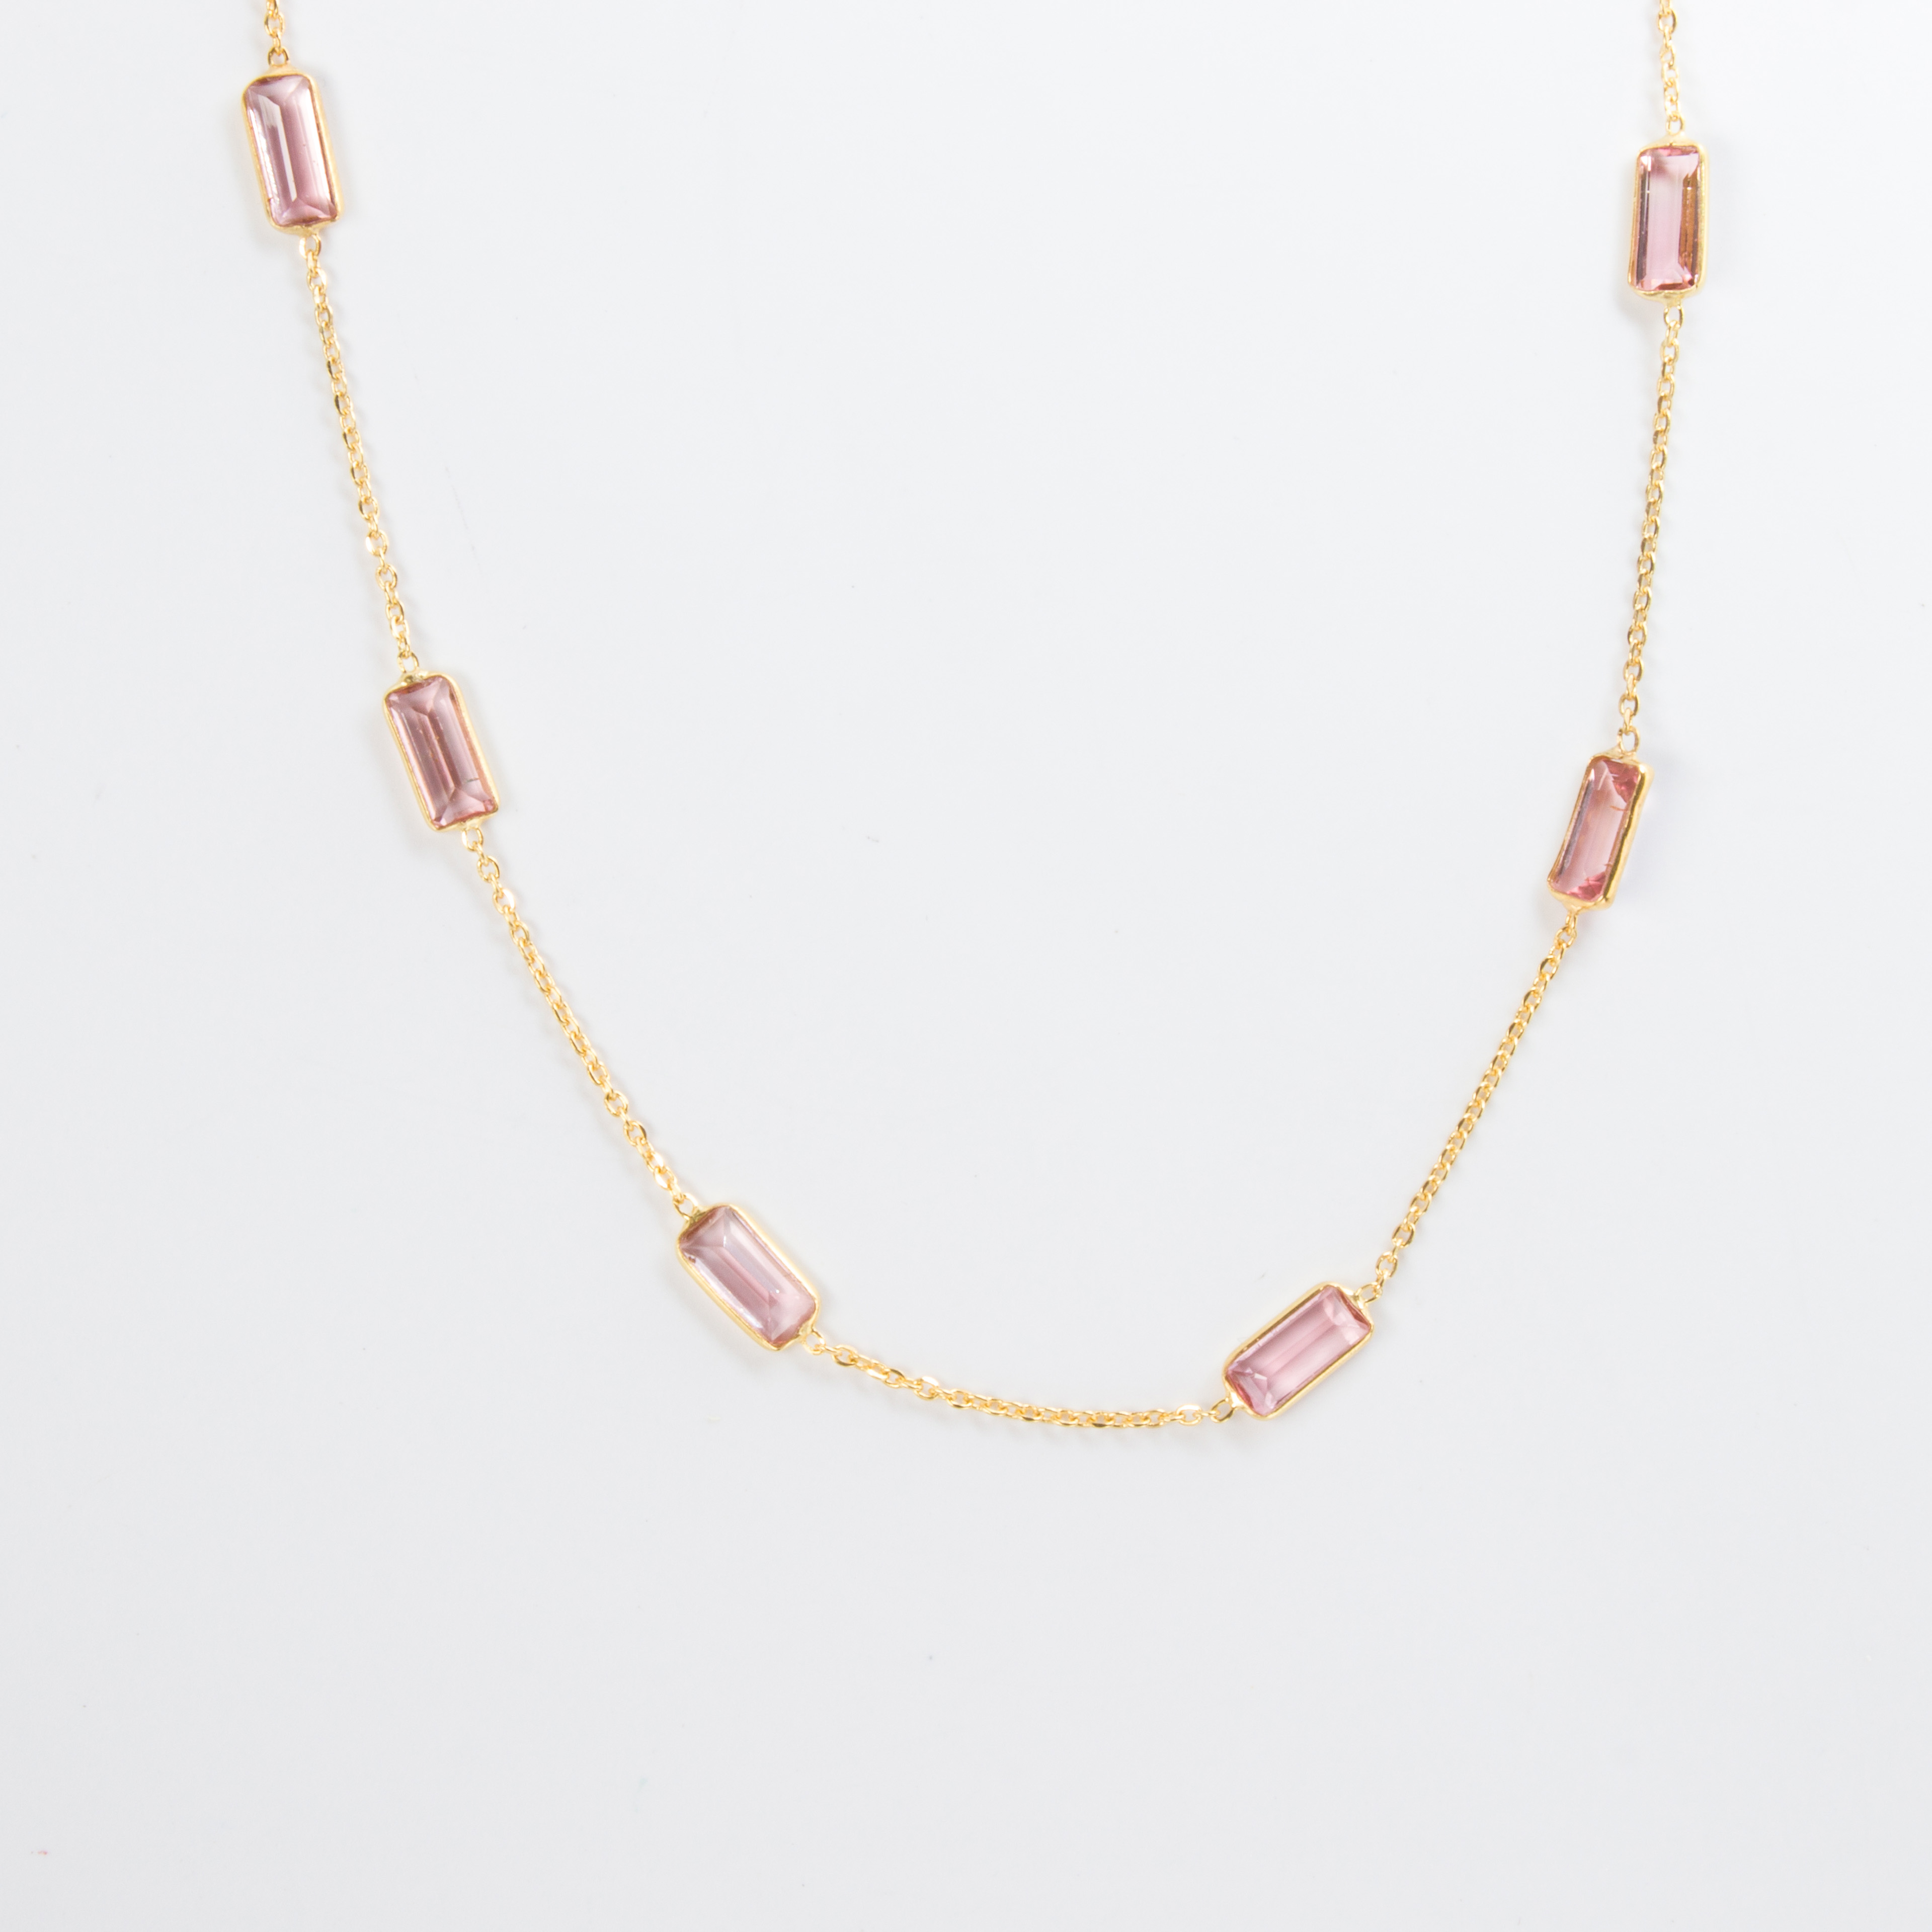 A pink tourmaline and eighteen karat gold necklace - Image 2 of 2